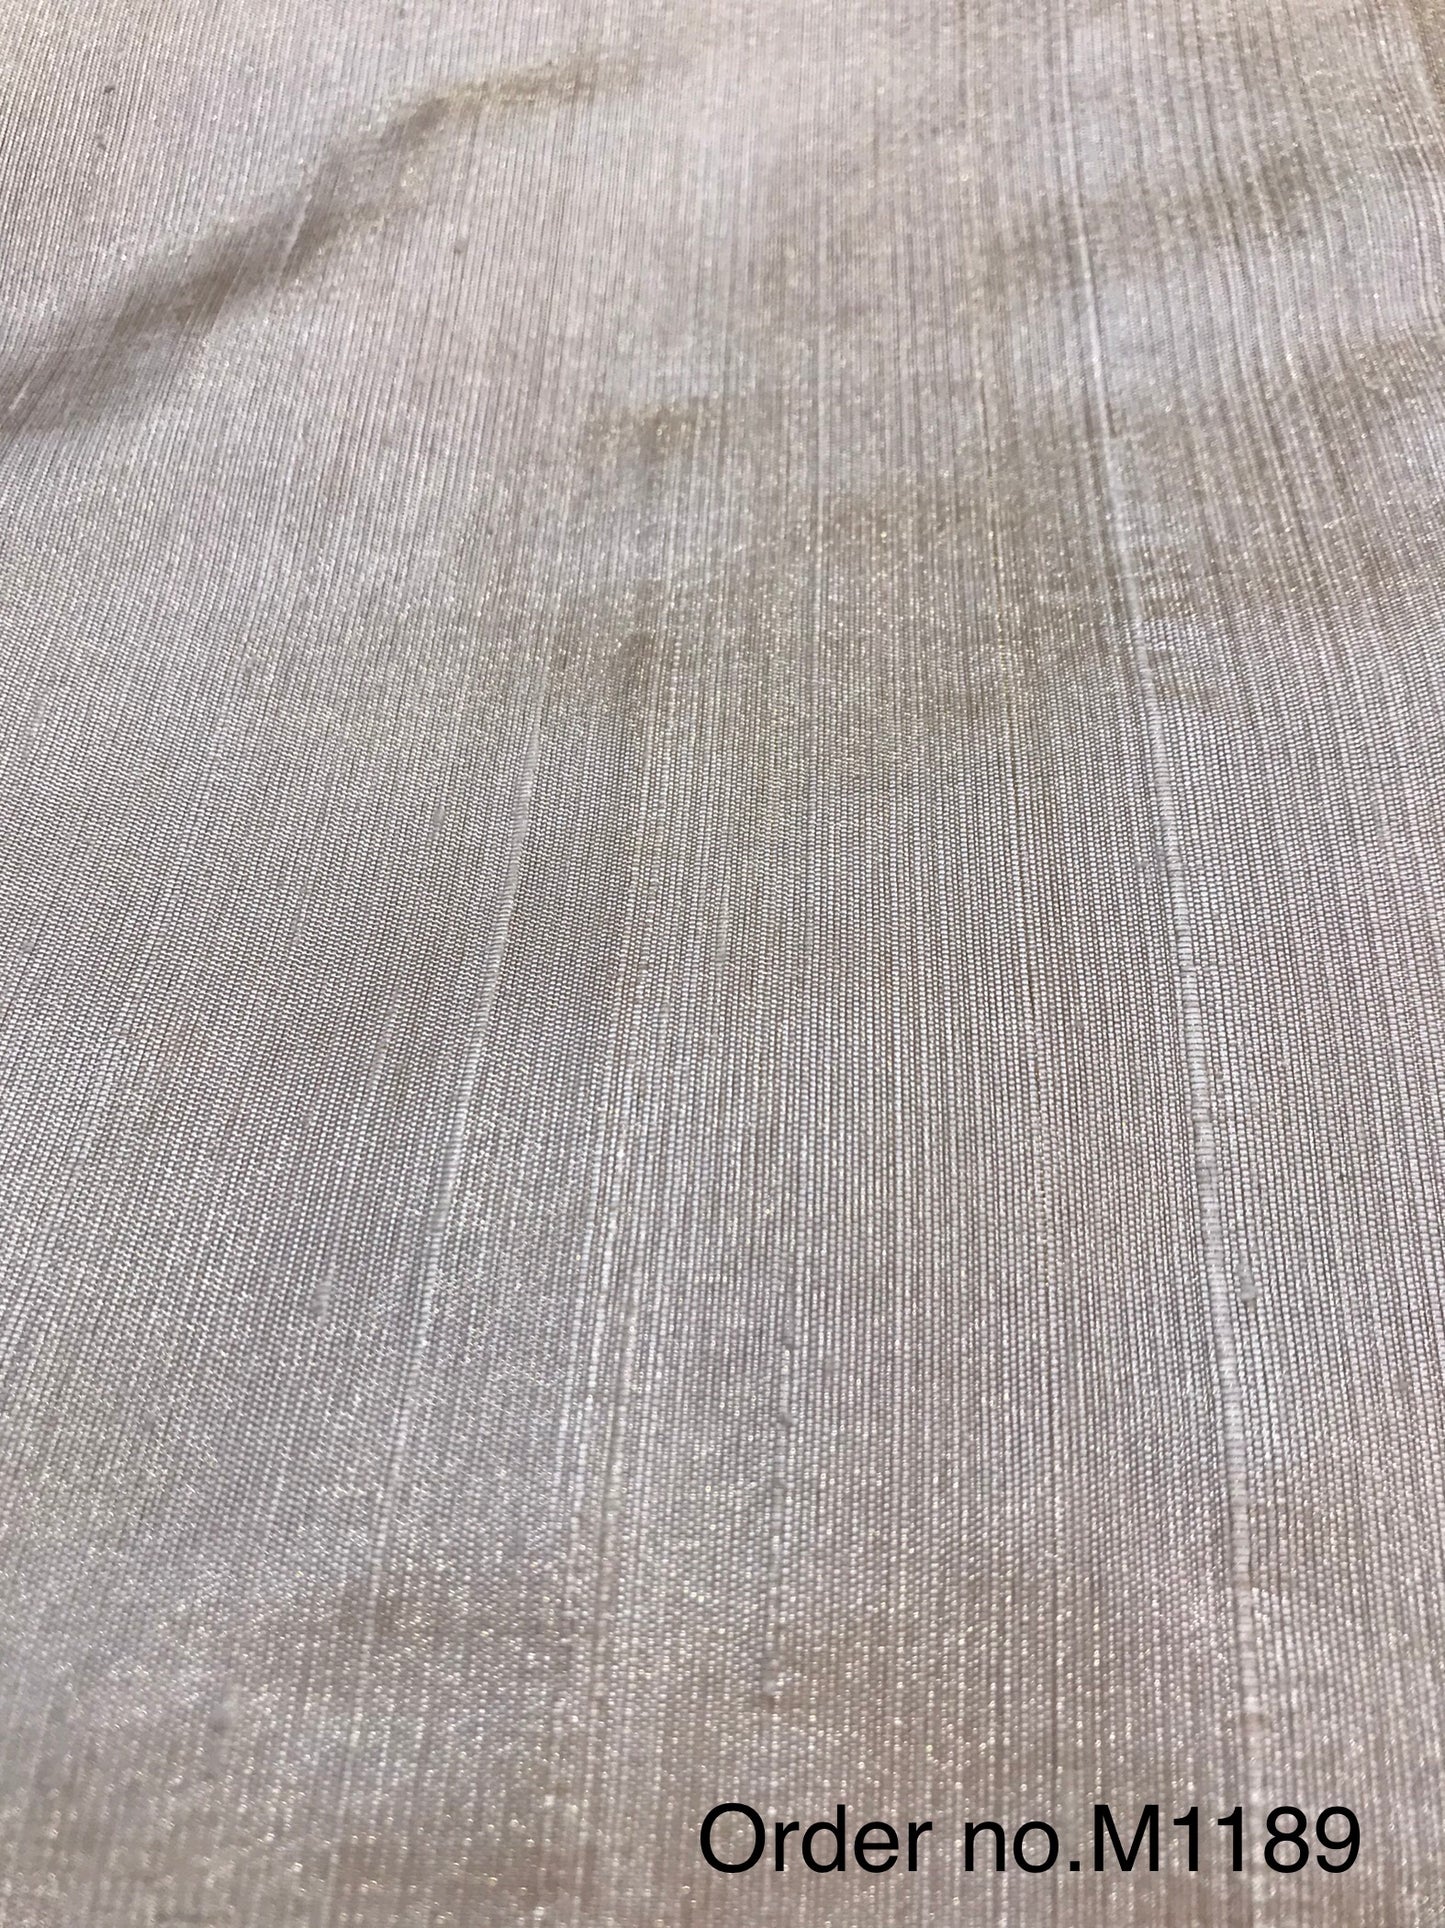 Gold tissue raw silk 105gm width 44”